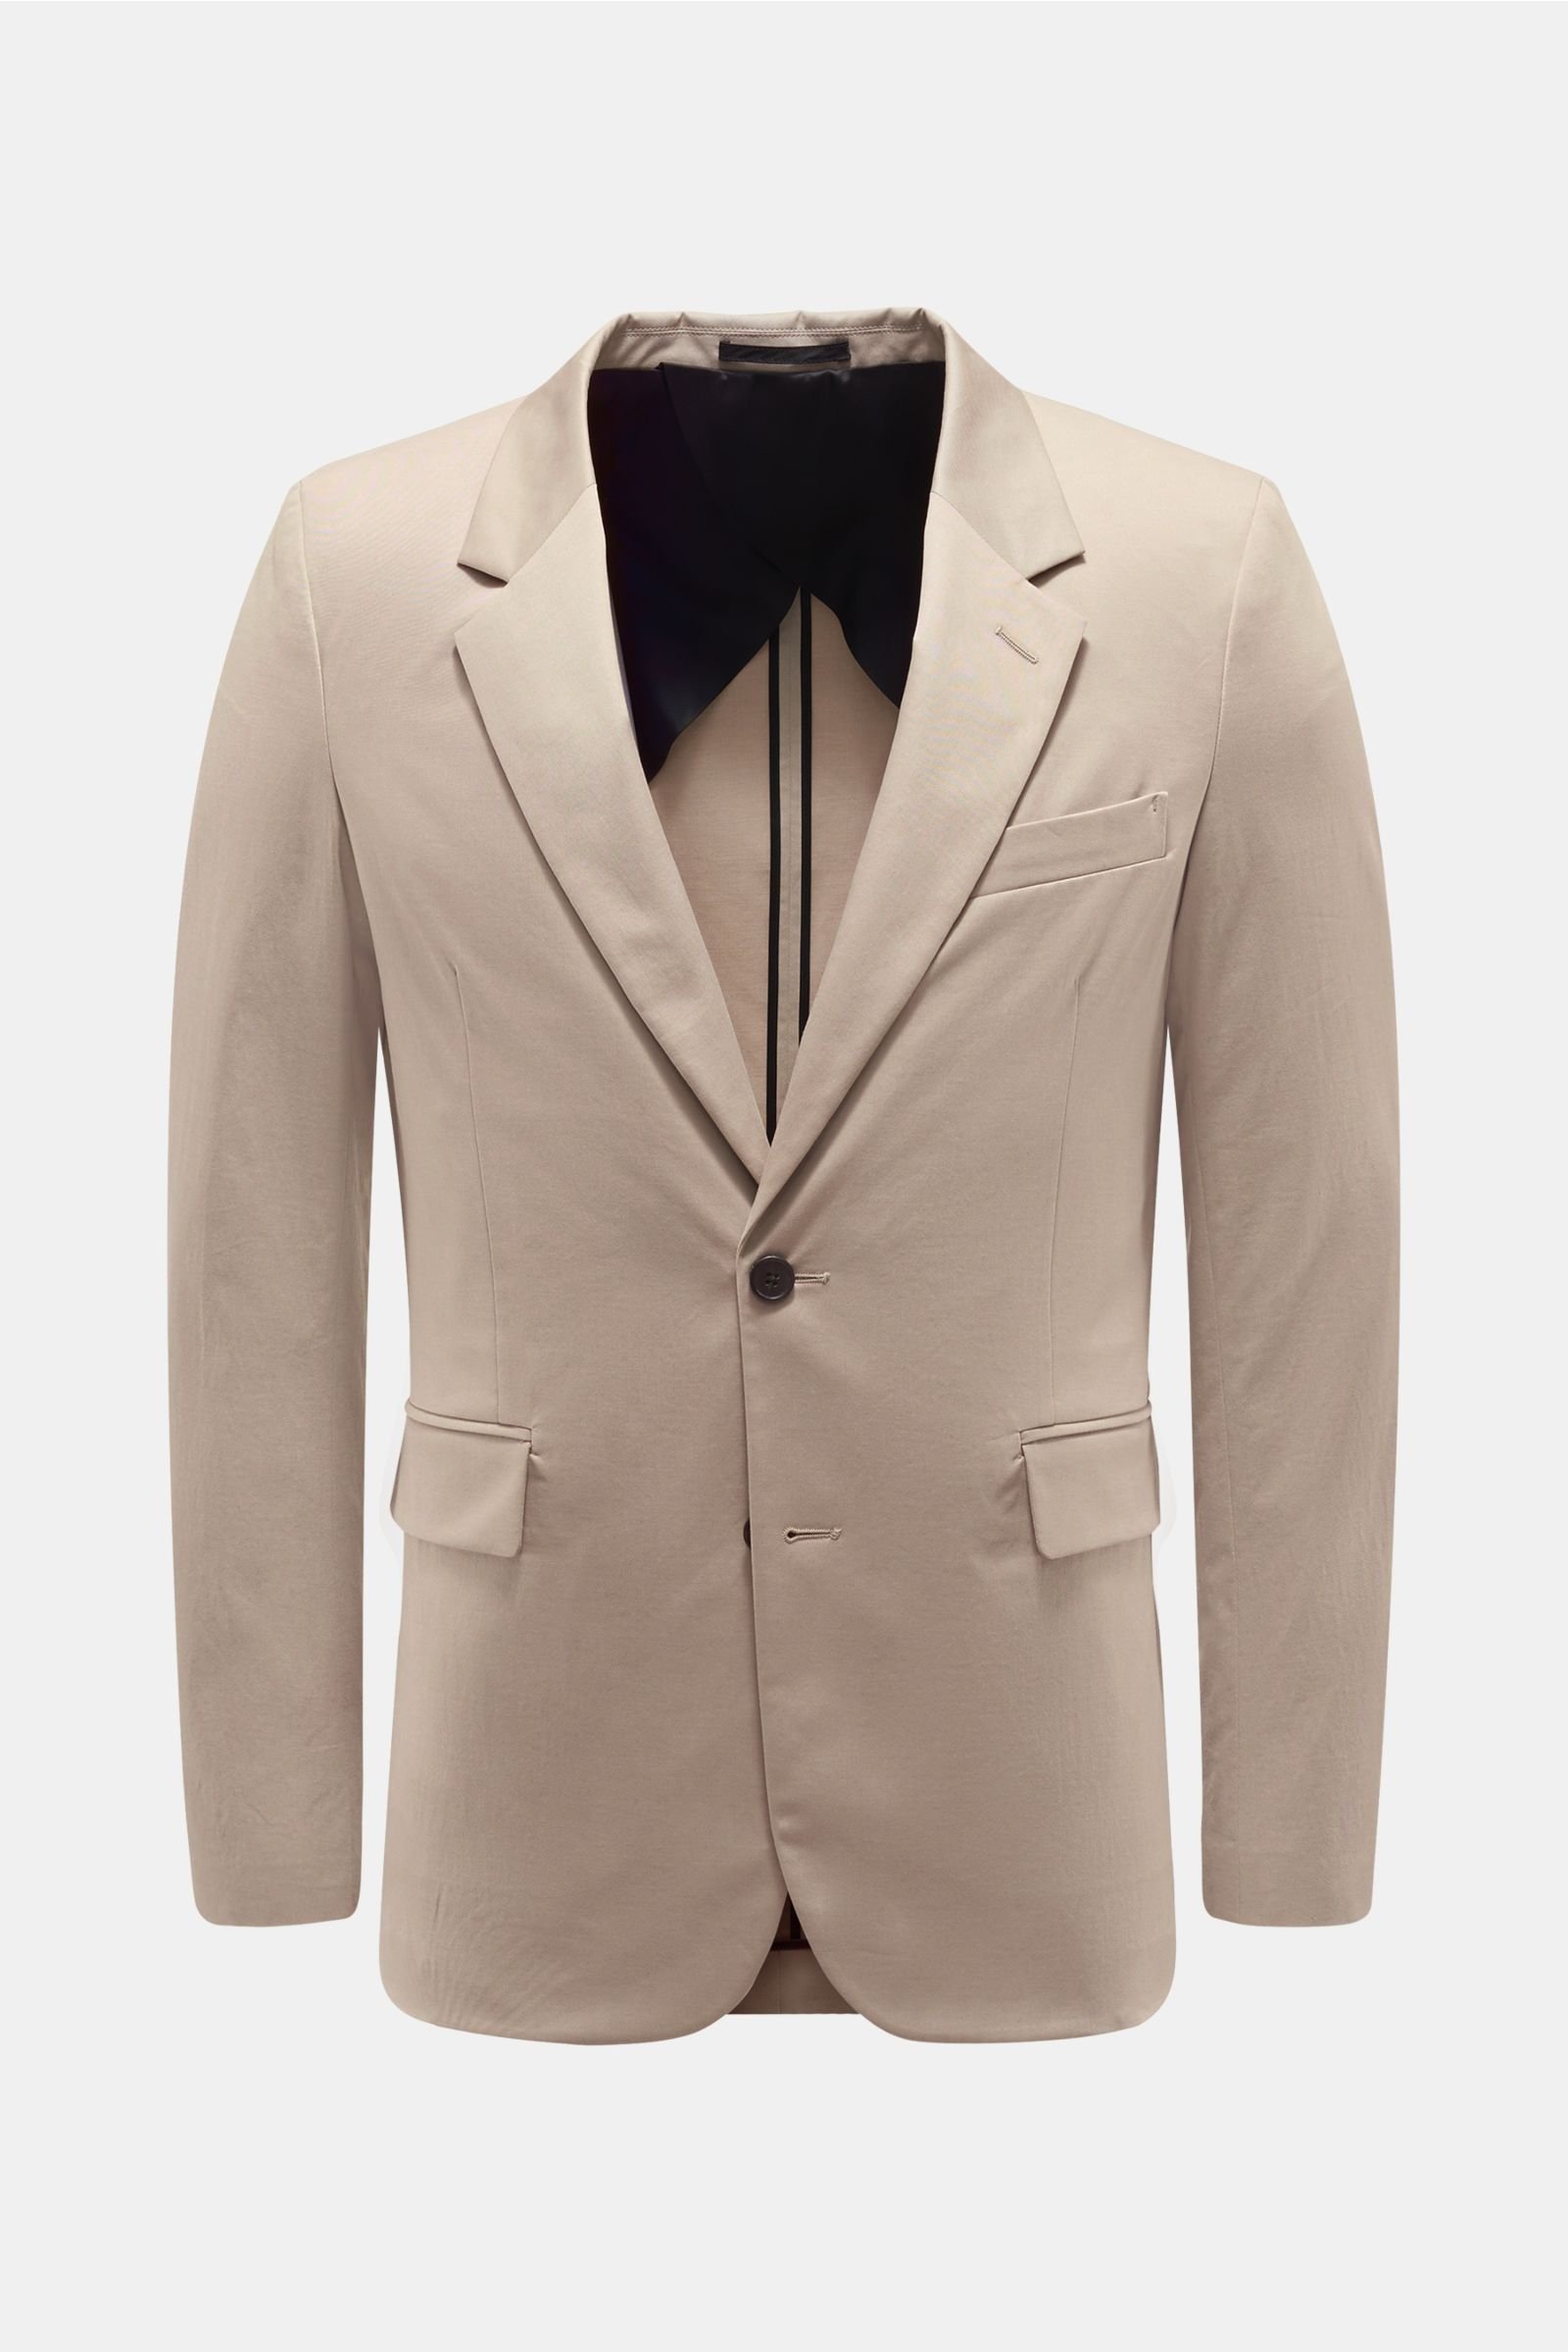 THE ROW smart-casual jacket 'Slater' beige | BRAUN Hamburg